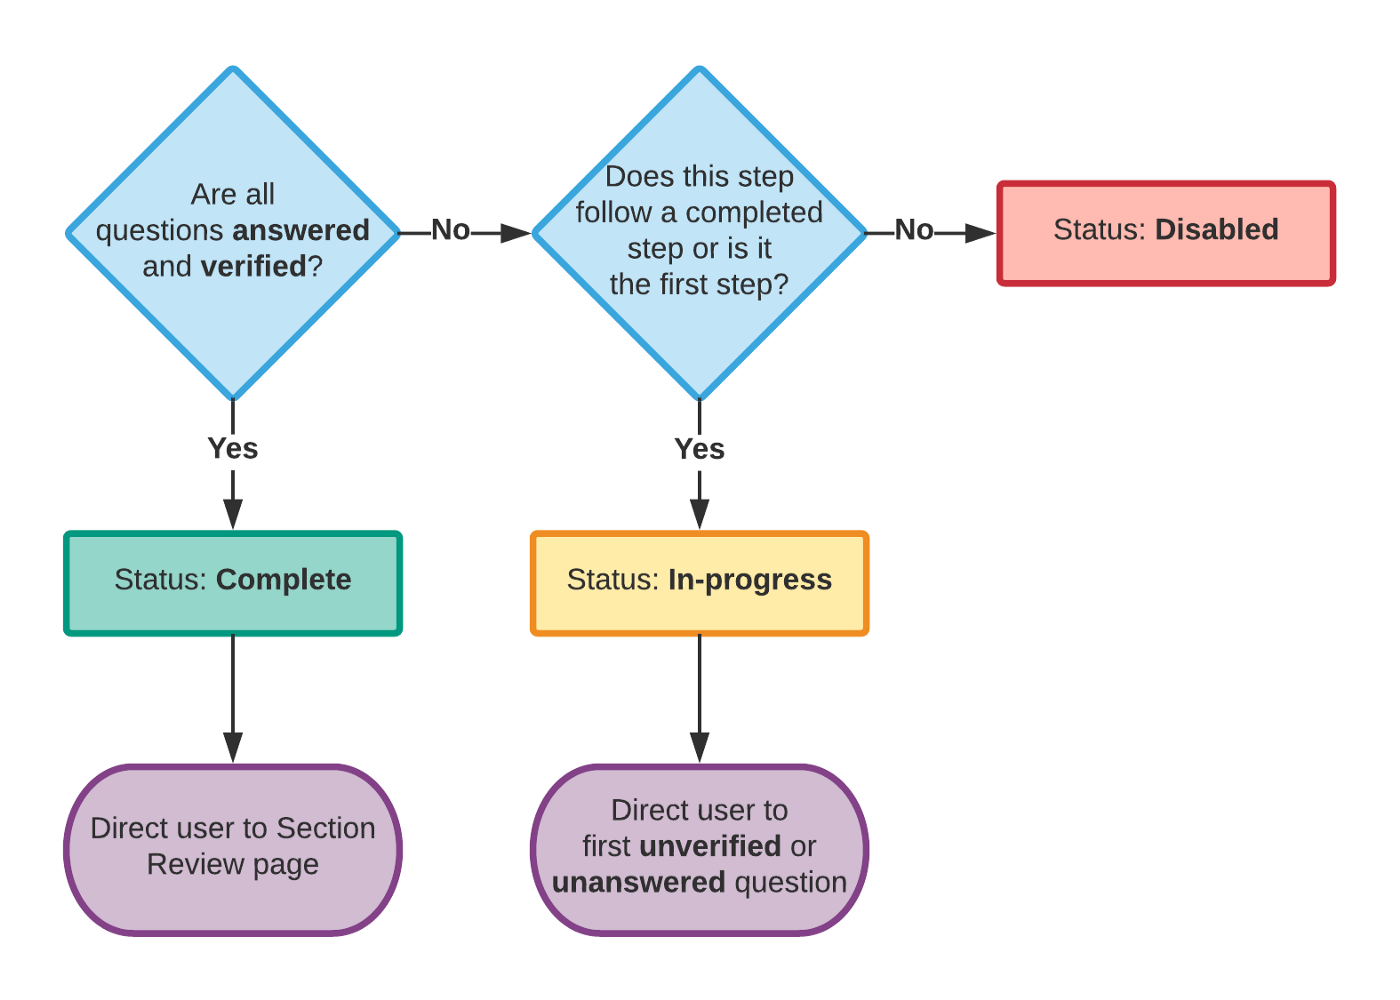 A screenshot of a decision tree chart